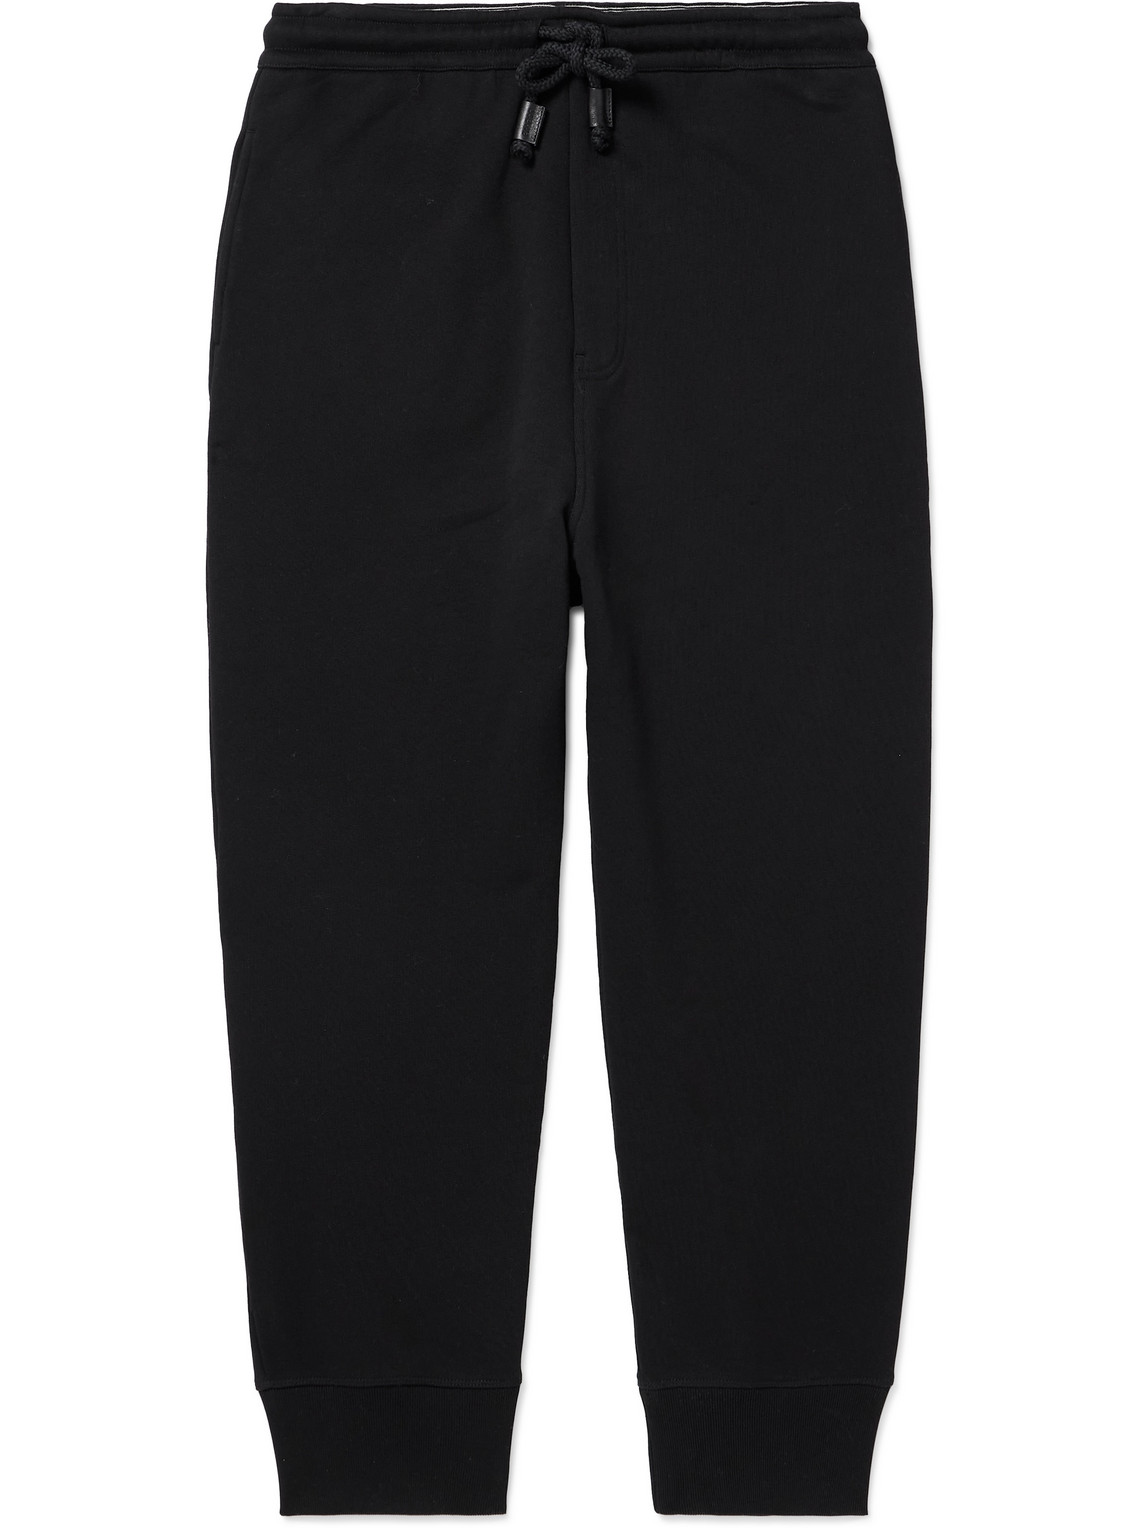 LOEWE - Tapered Cotton-Jersey Sweatpants - Men - Black - XXL von LOEWE